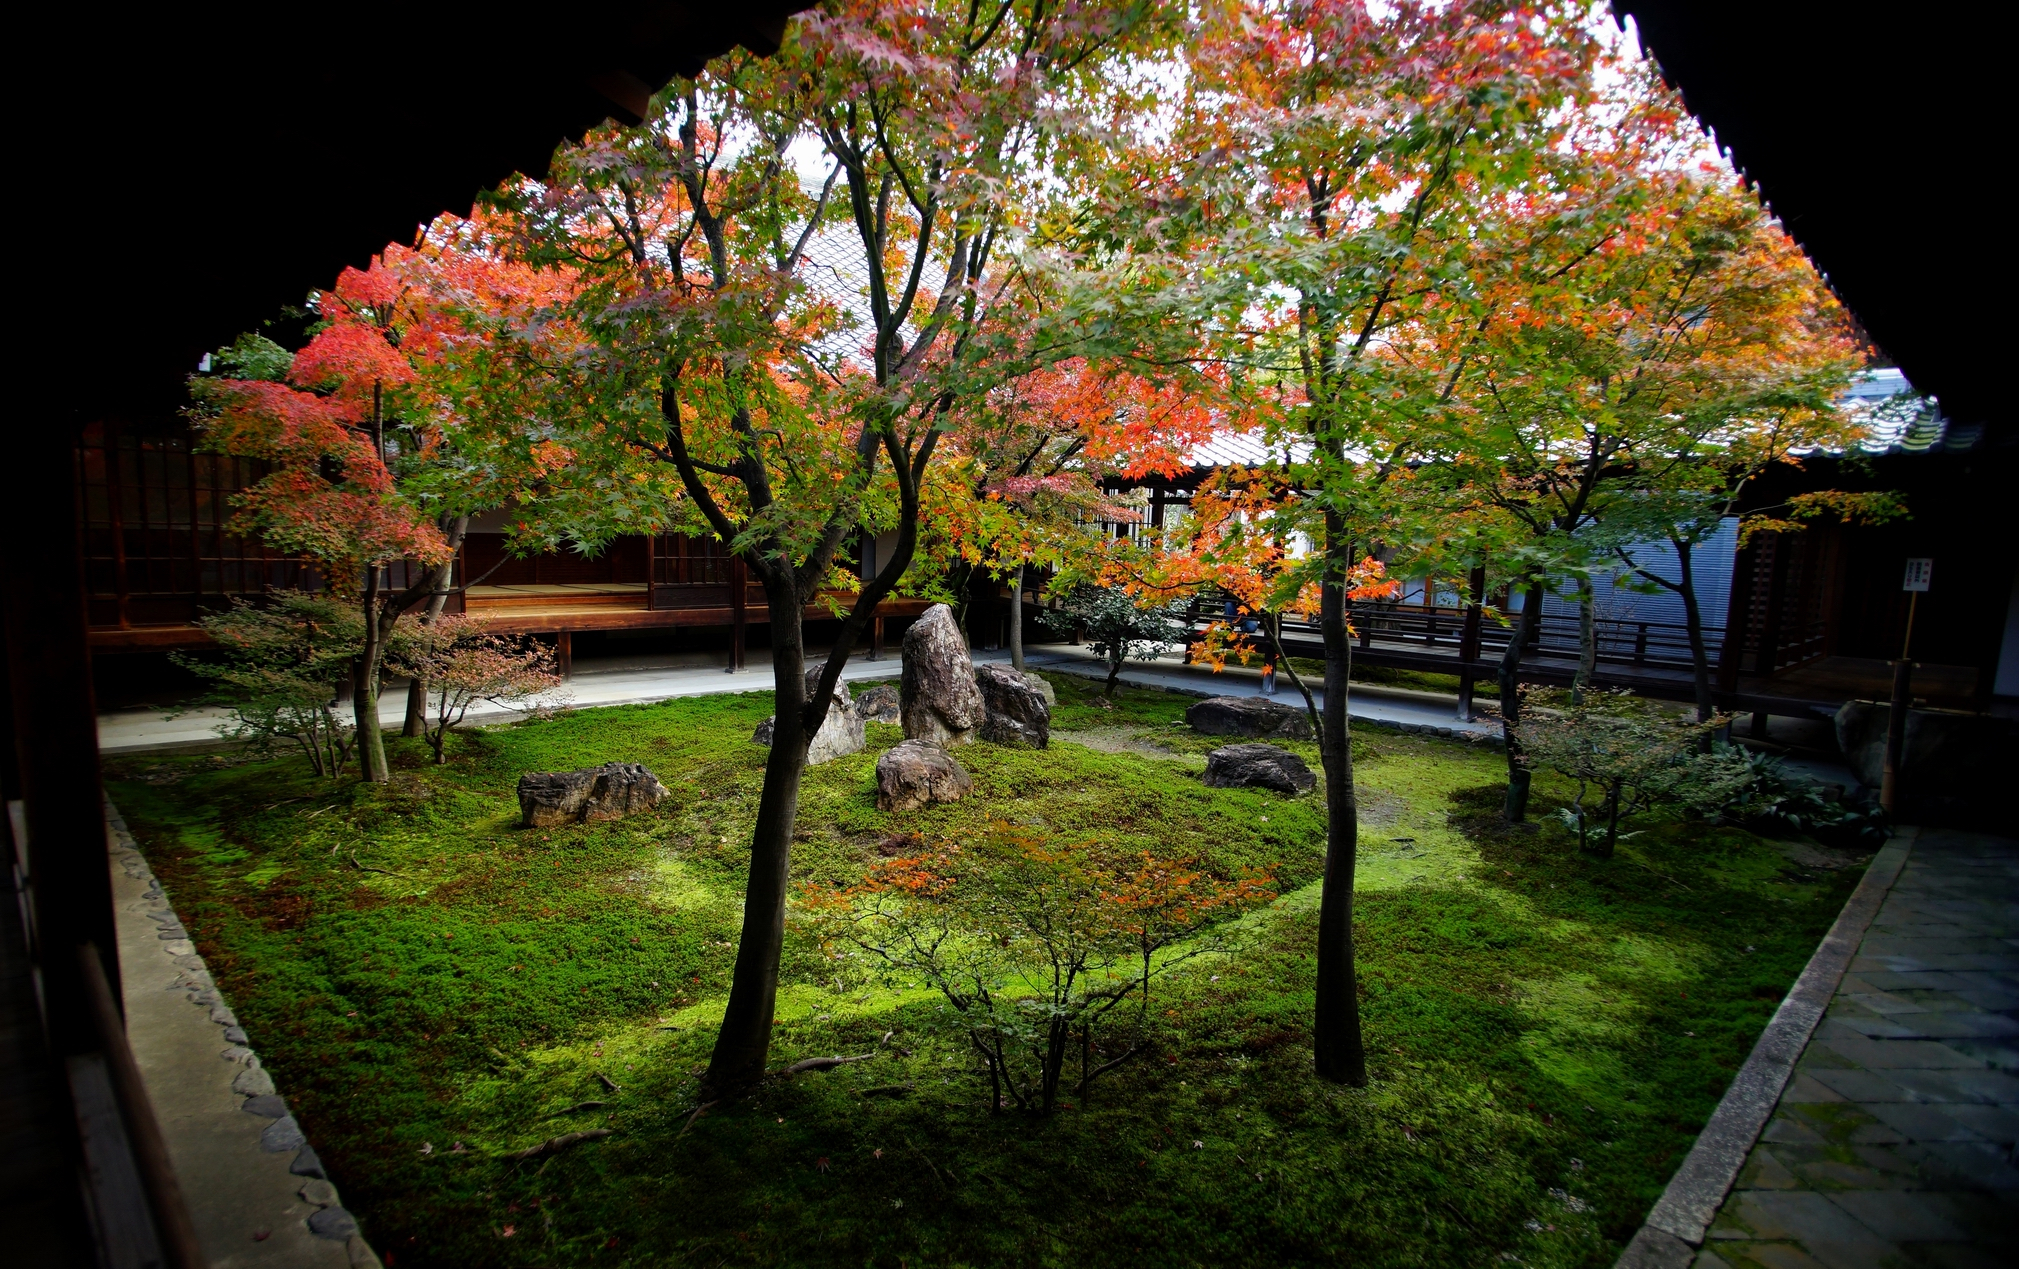 2019x1269 Wallpaper : nature, Japan, temple, Kyoto, autumncolors, zen, kenninjitemple, 20141127dsc09654, kyotokenninji 947442 HD Wallpapers